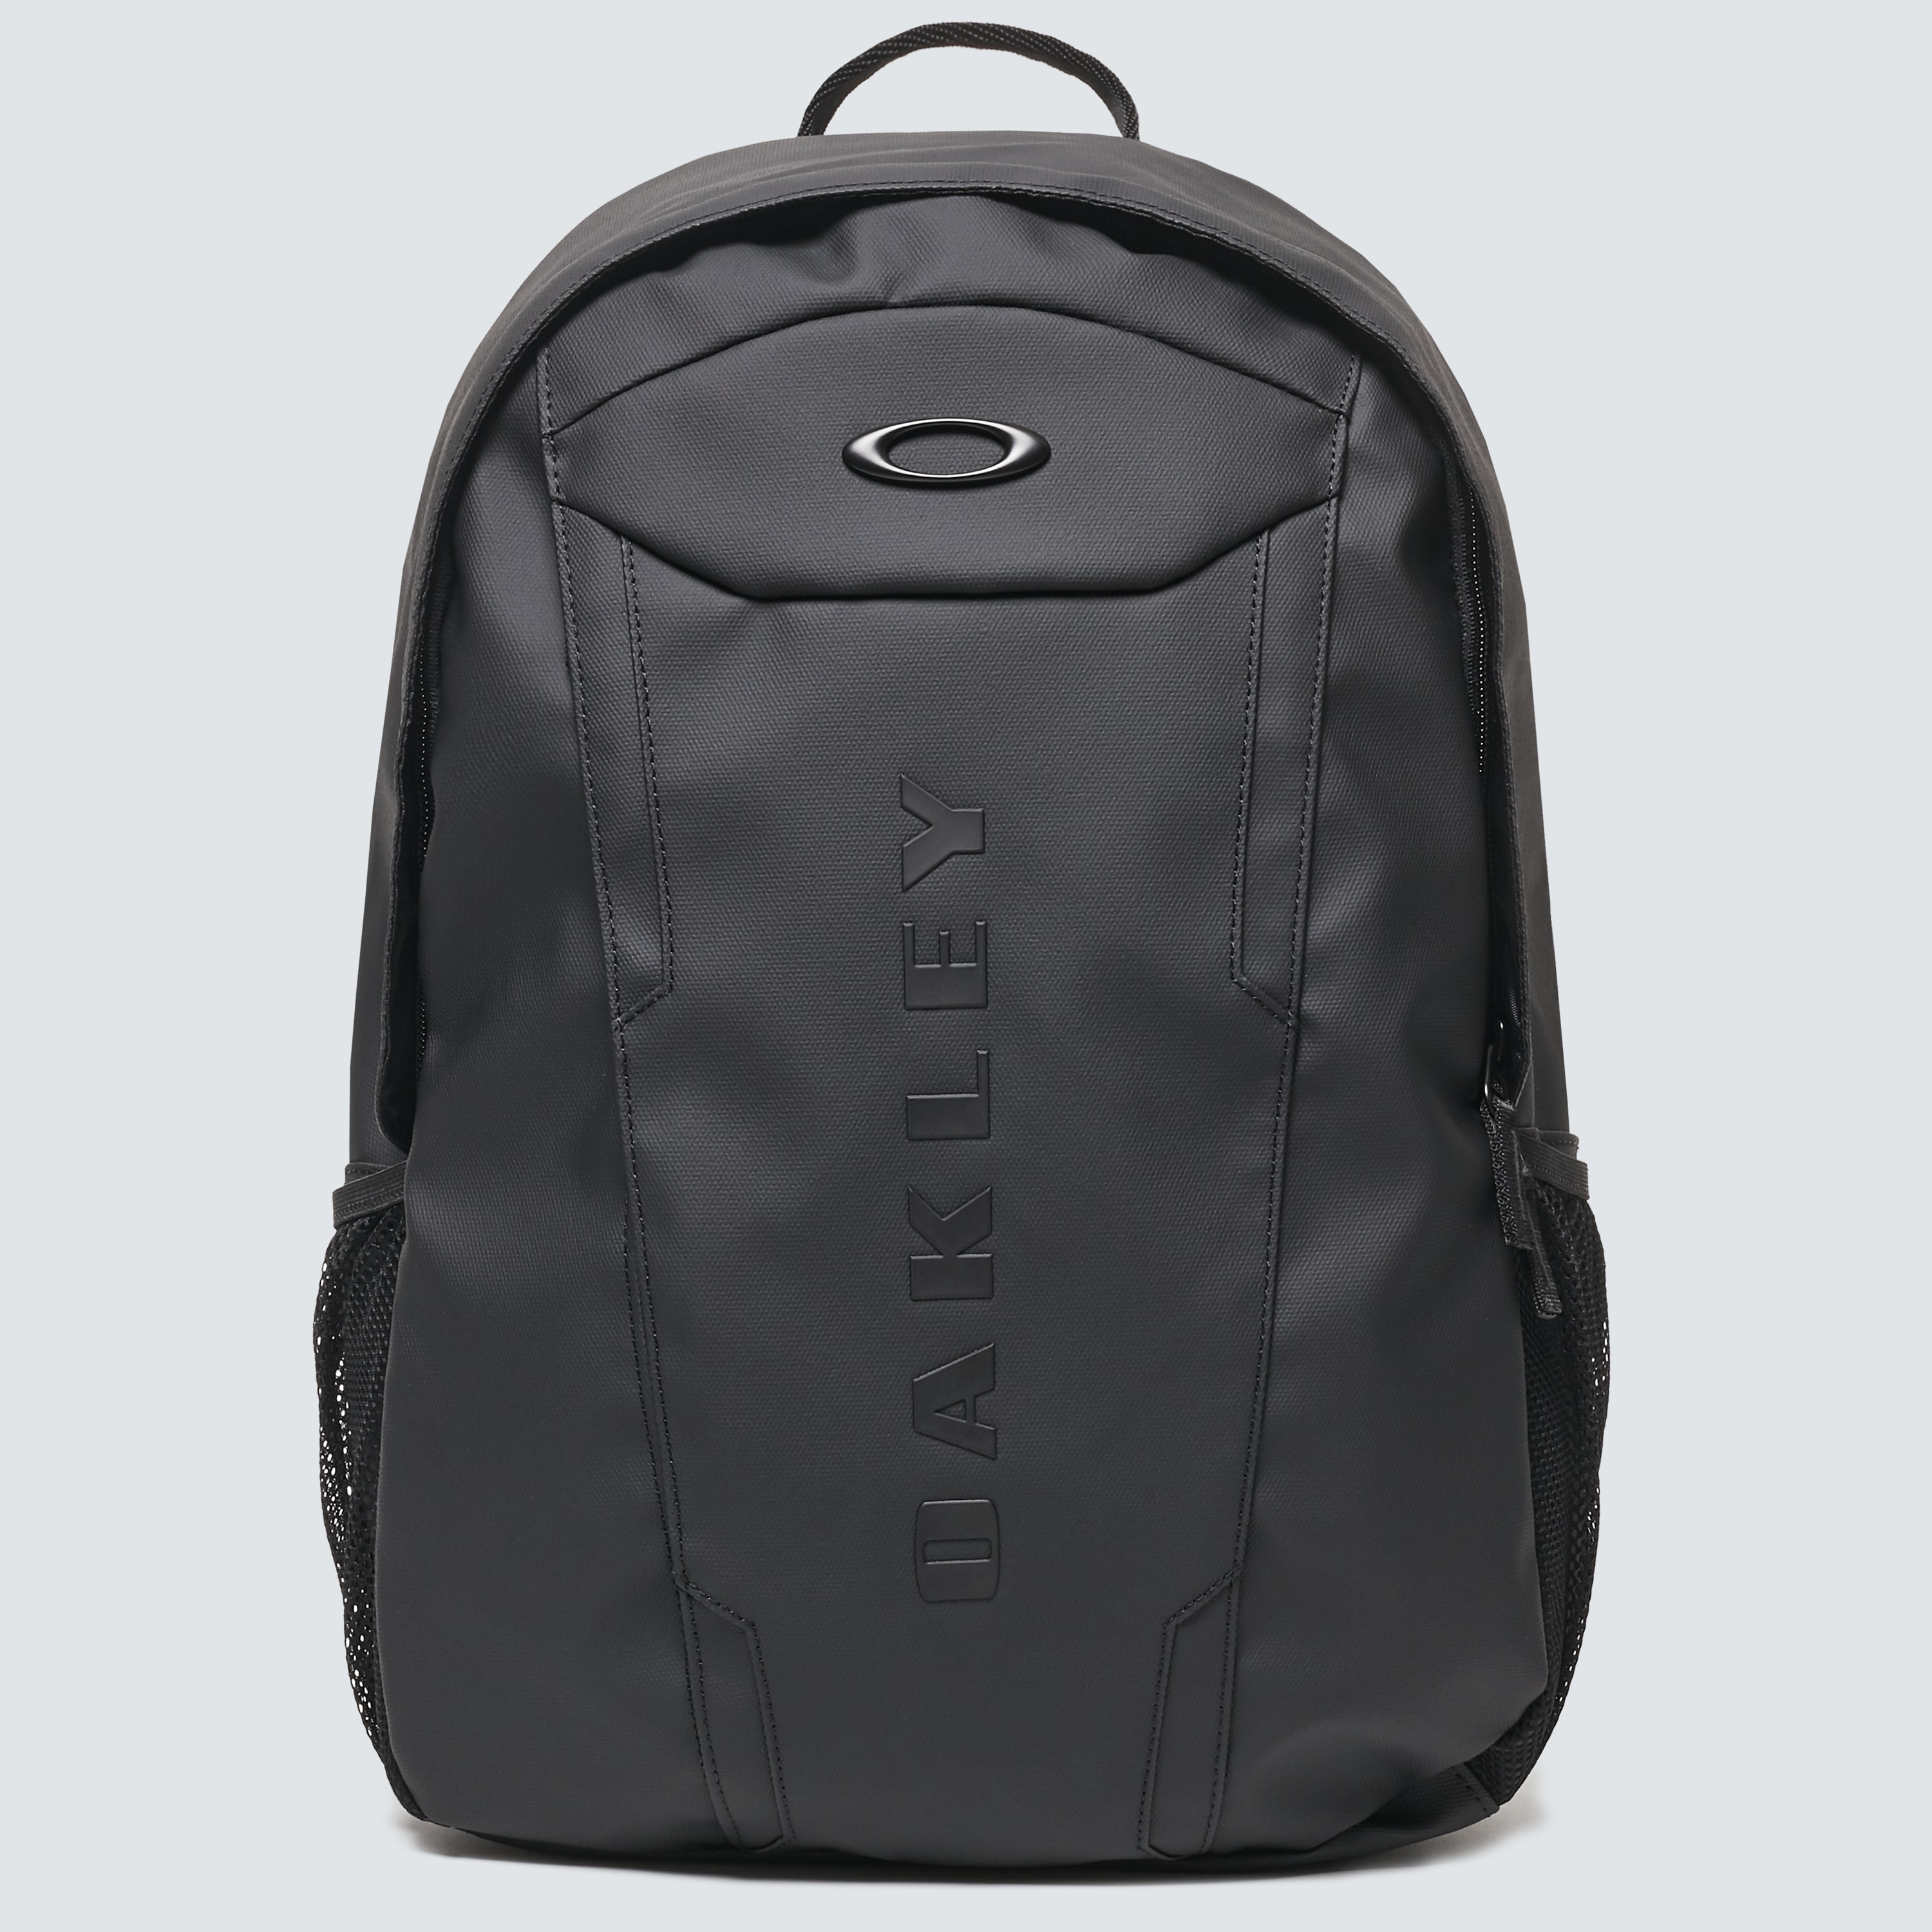 Oakley Travel Backpack - Blackout 